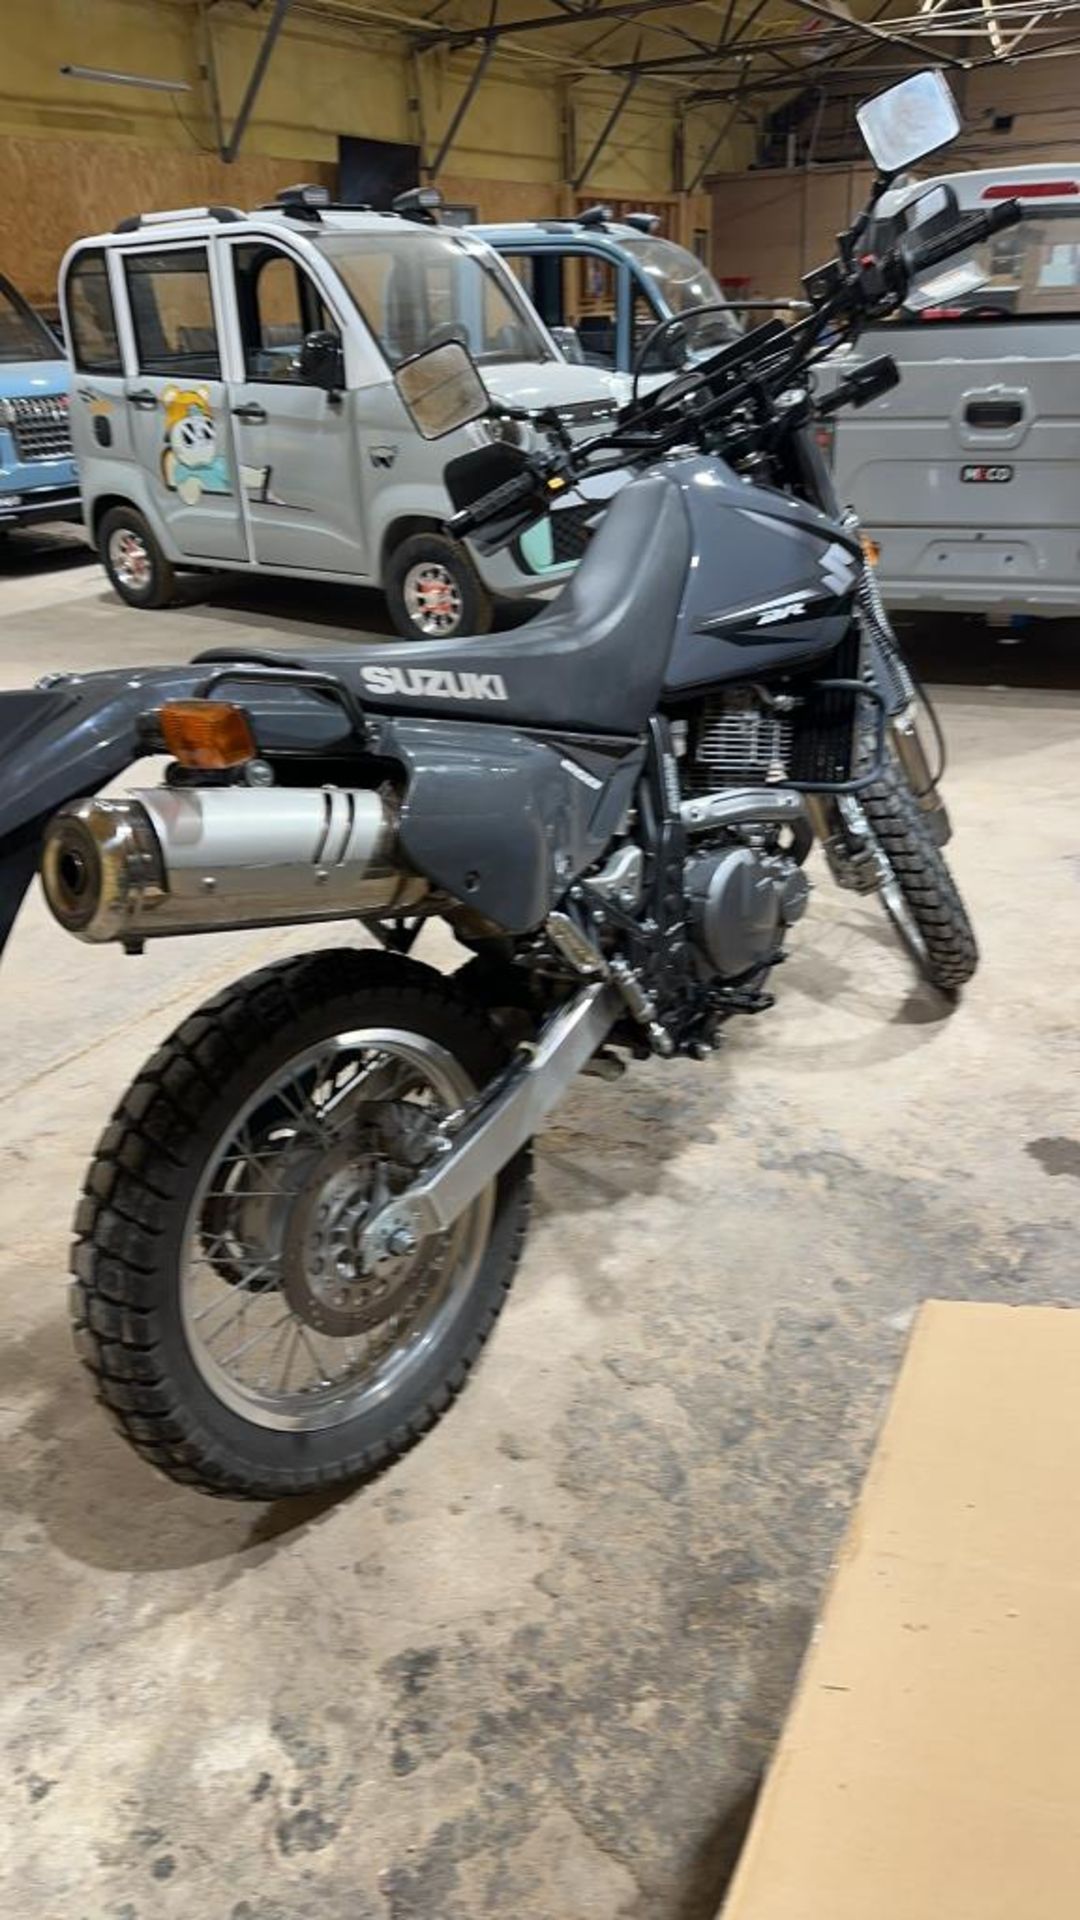 2012 Suzuki DR650S motorcycle - Image 15 of 36